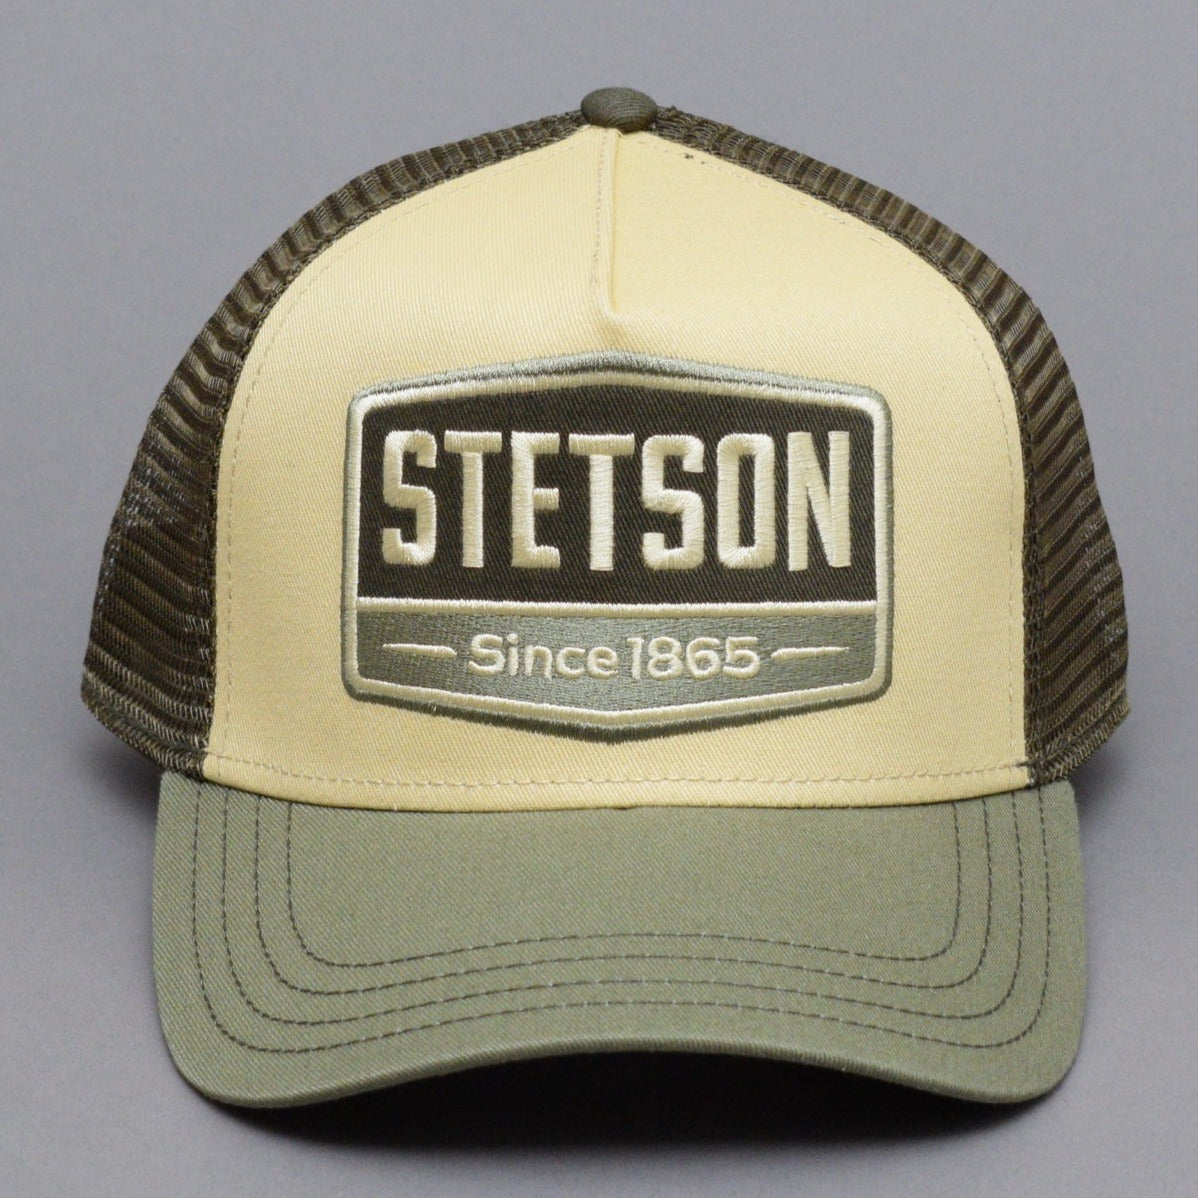 Stetson - Gasoline - Trucker/Snapback - Khaki/Beige